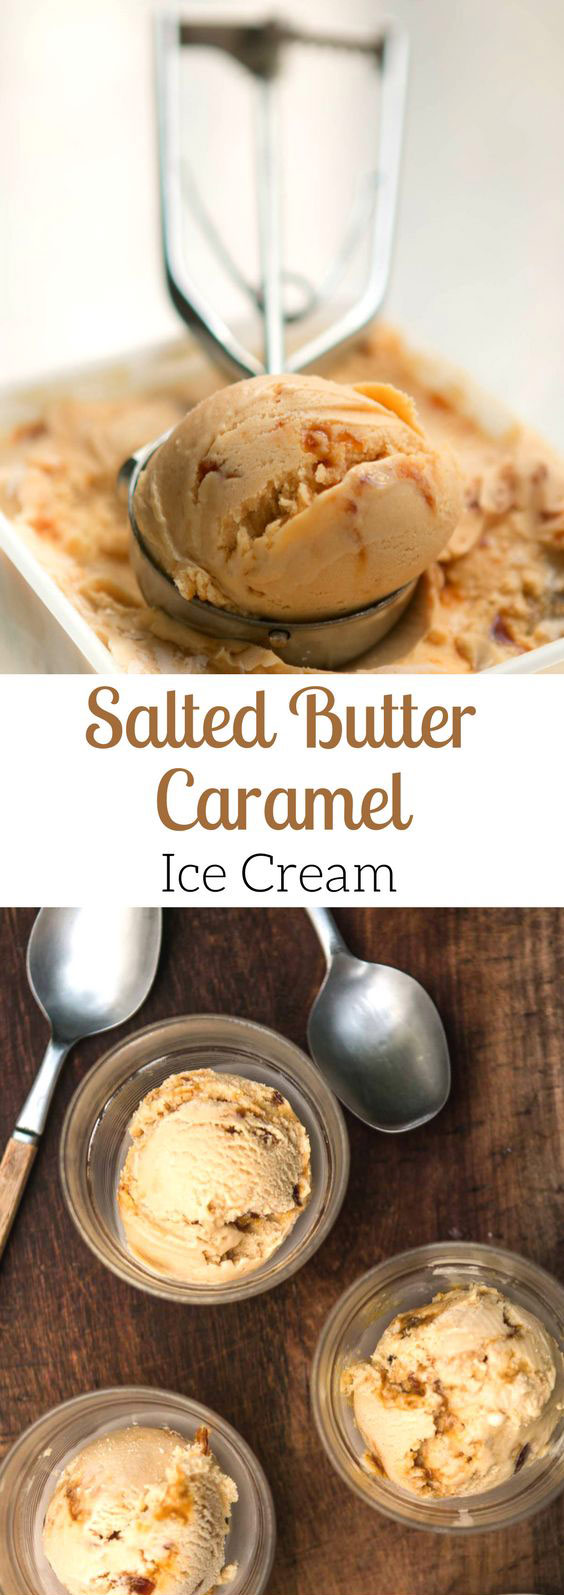 Salted Butter Caramel Ice Cream Recipe